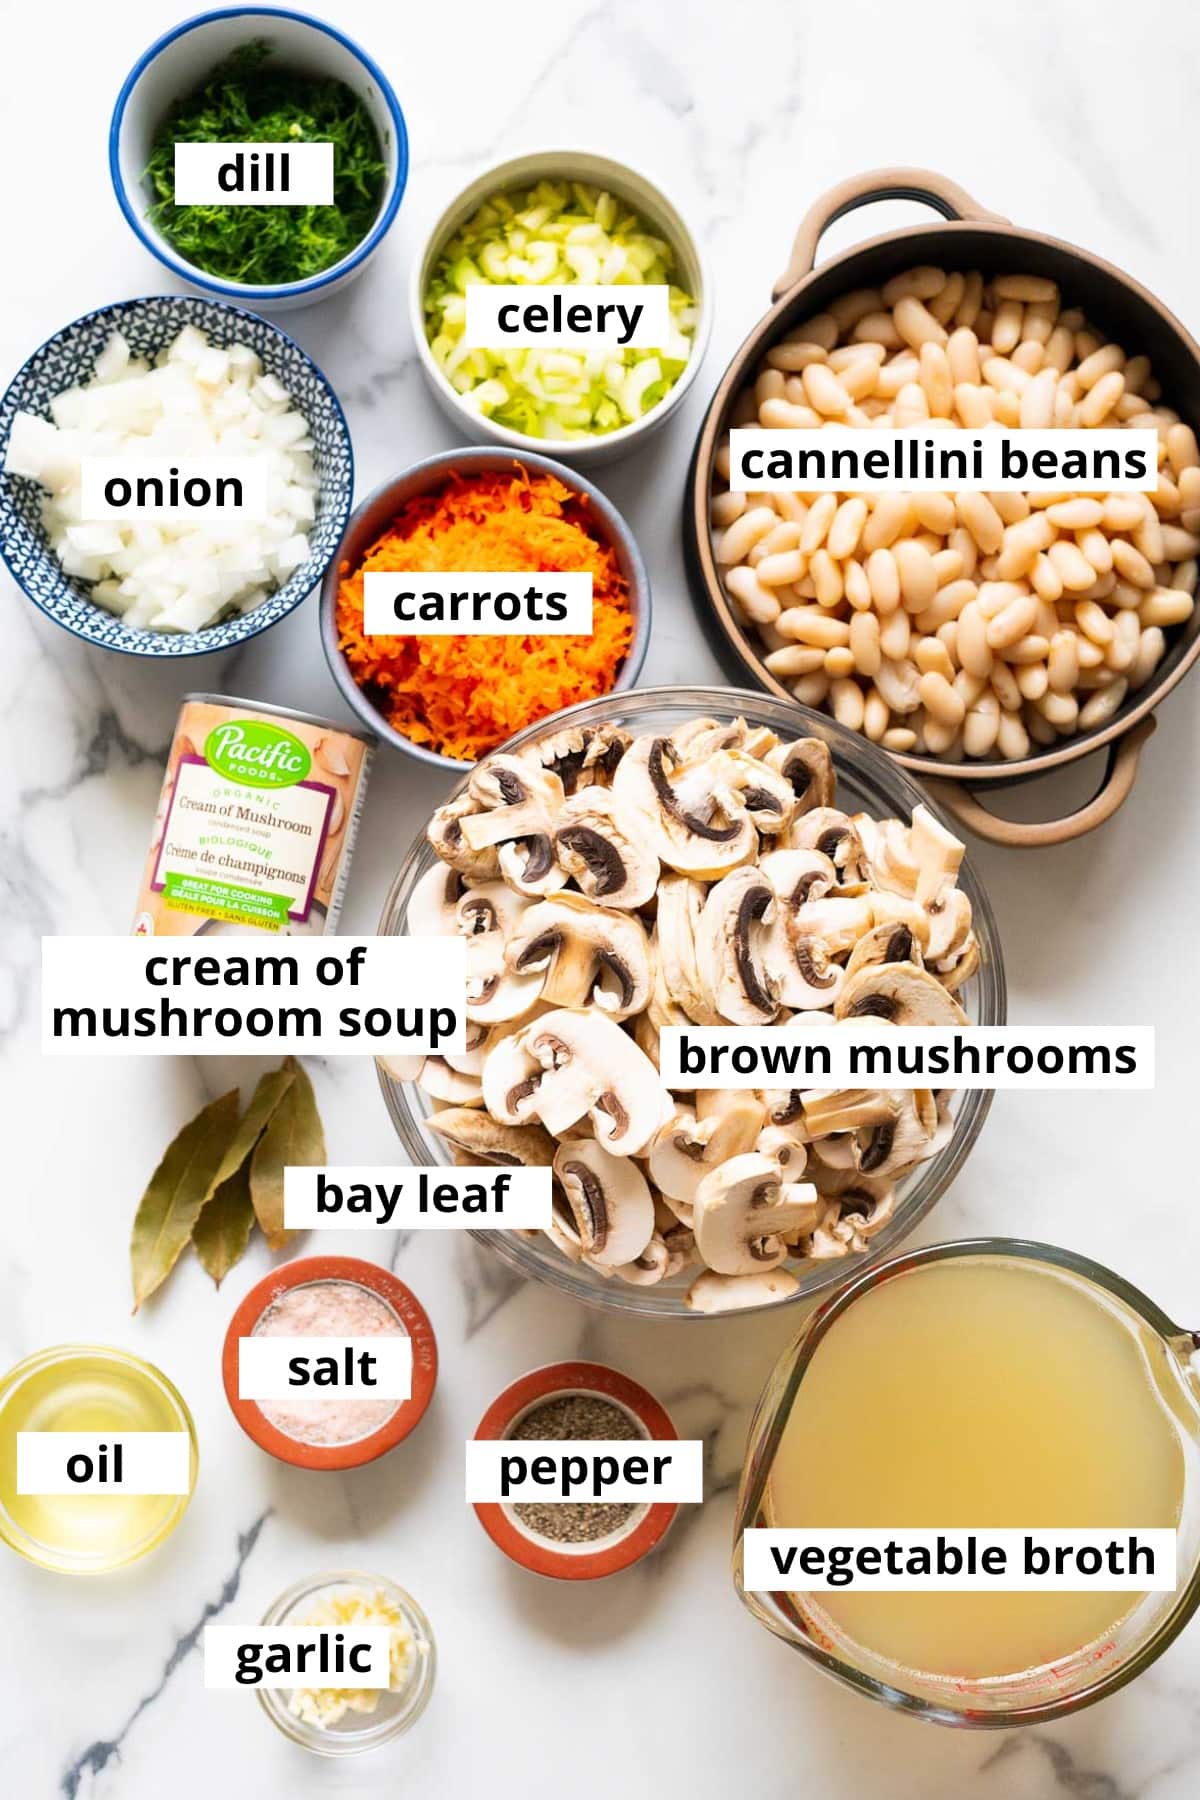 Mushrooms, beans, onion, celery, carrots, dill, cream of mushroom soup, bay leaf, vegetable broth, garlic, oil, salt and pepper.